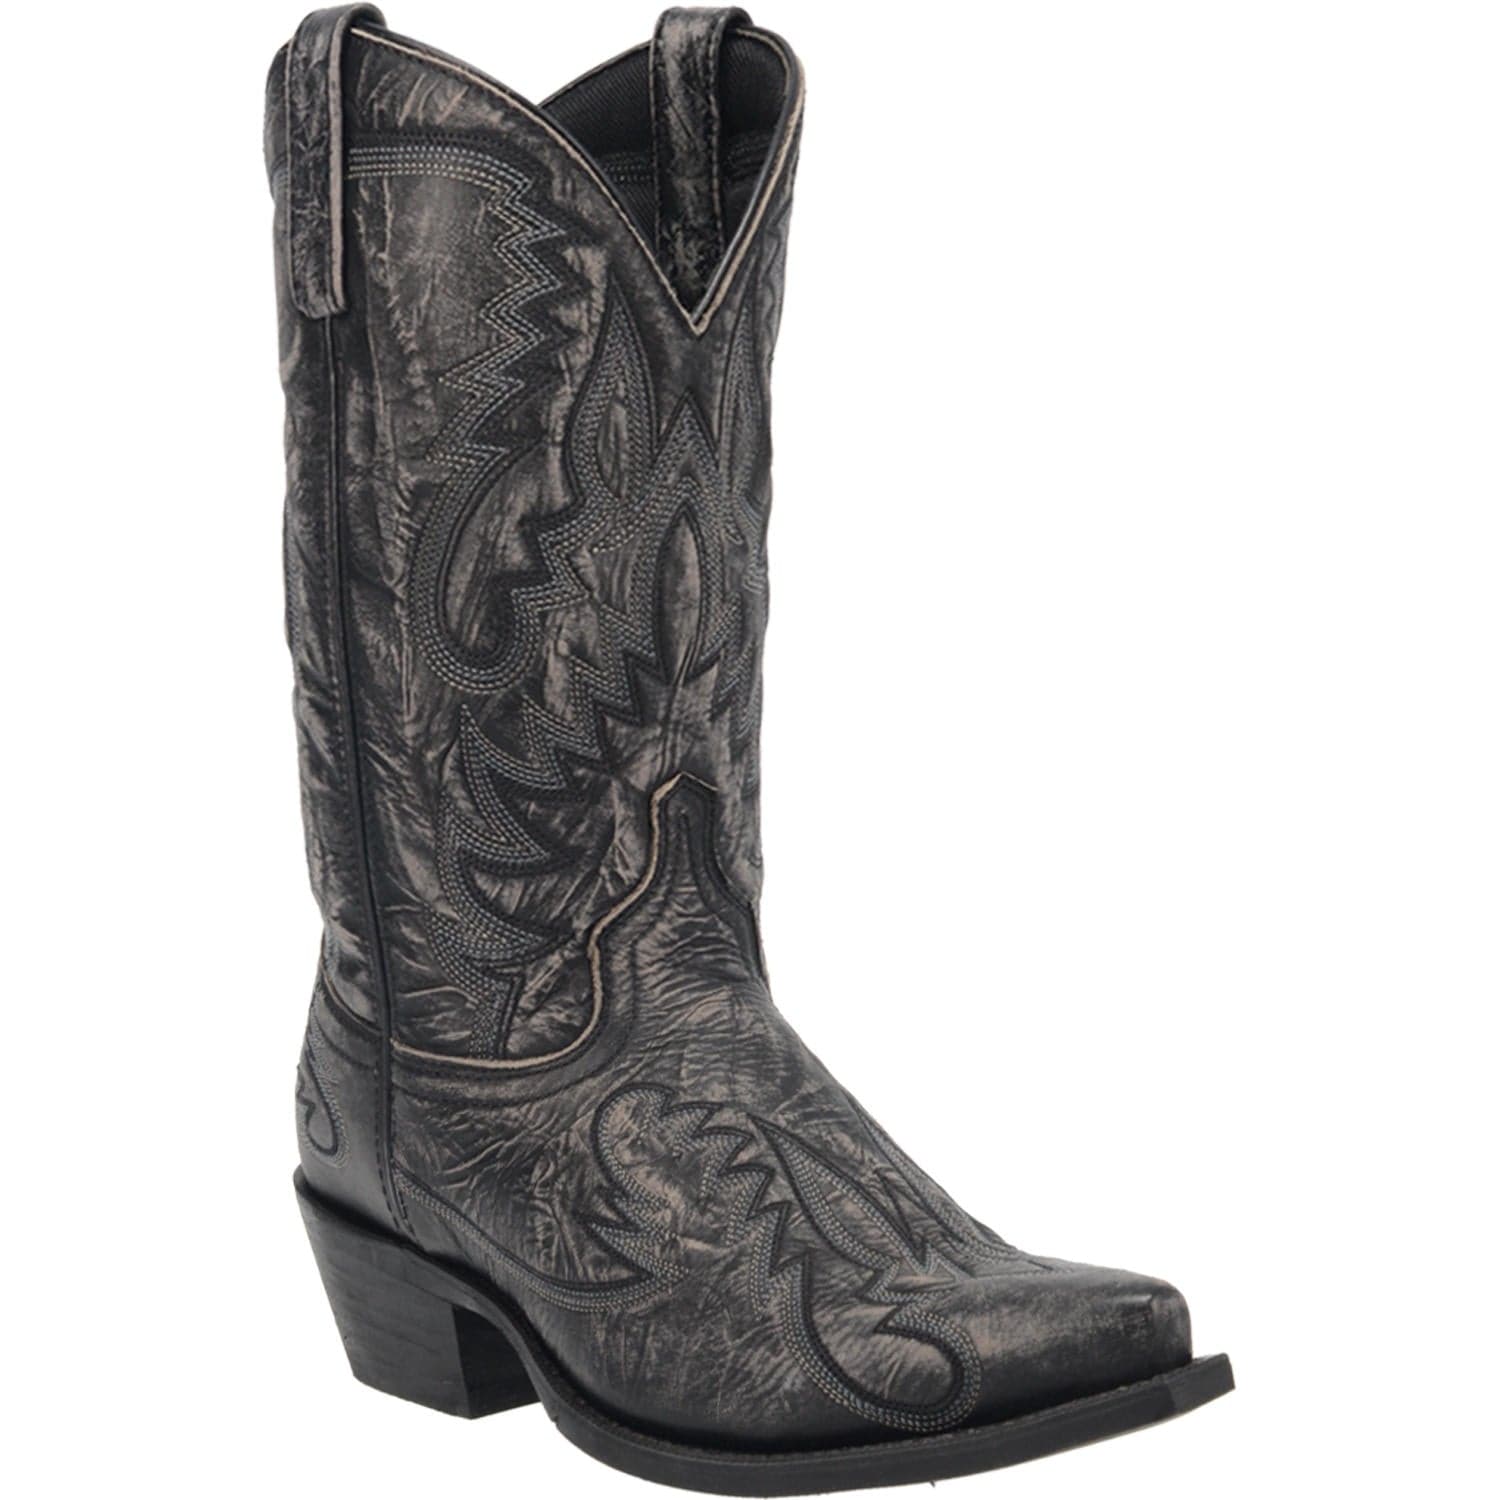 LAREDO Boots Laredo Men's Garrett Black Leather Cowboy Boots 68407